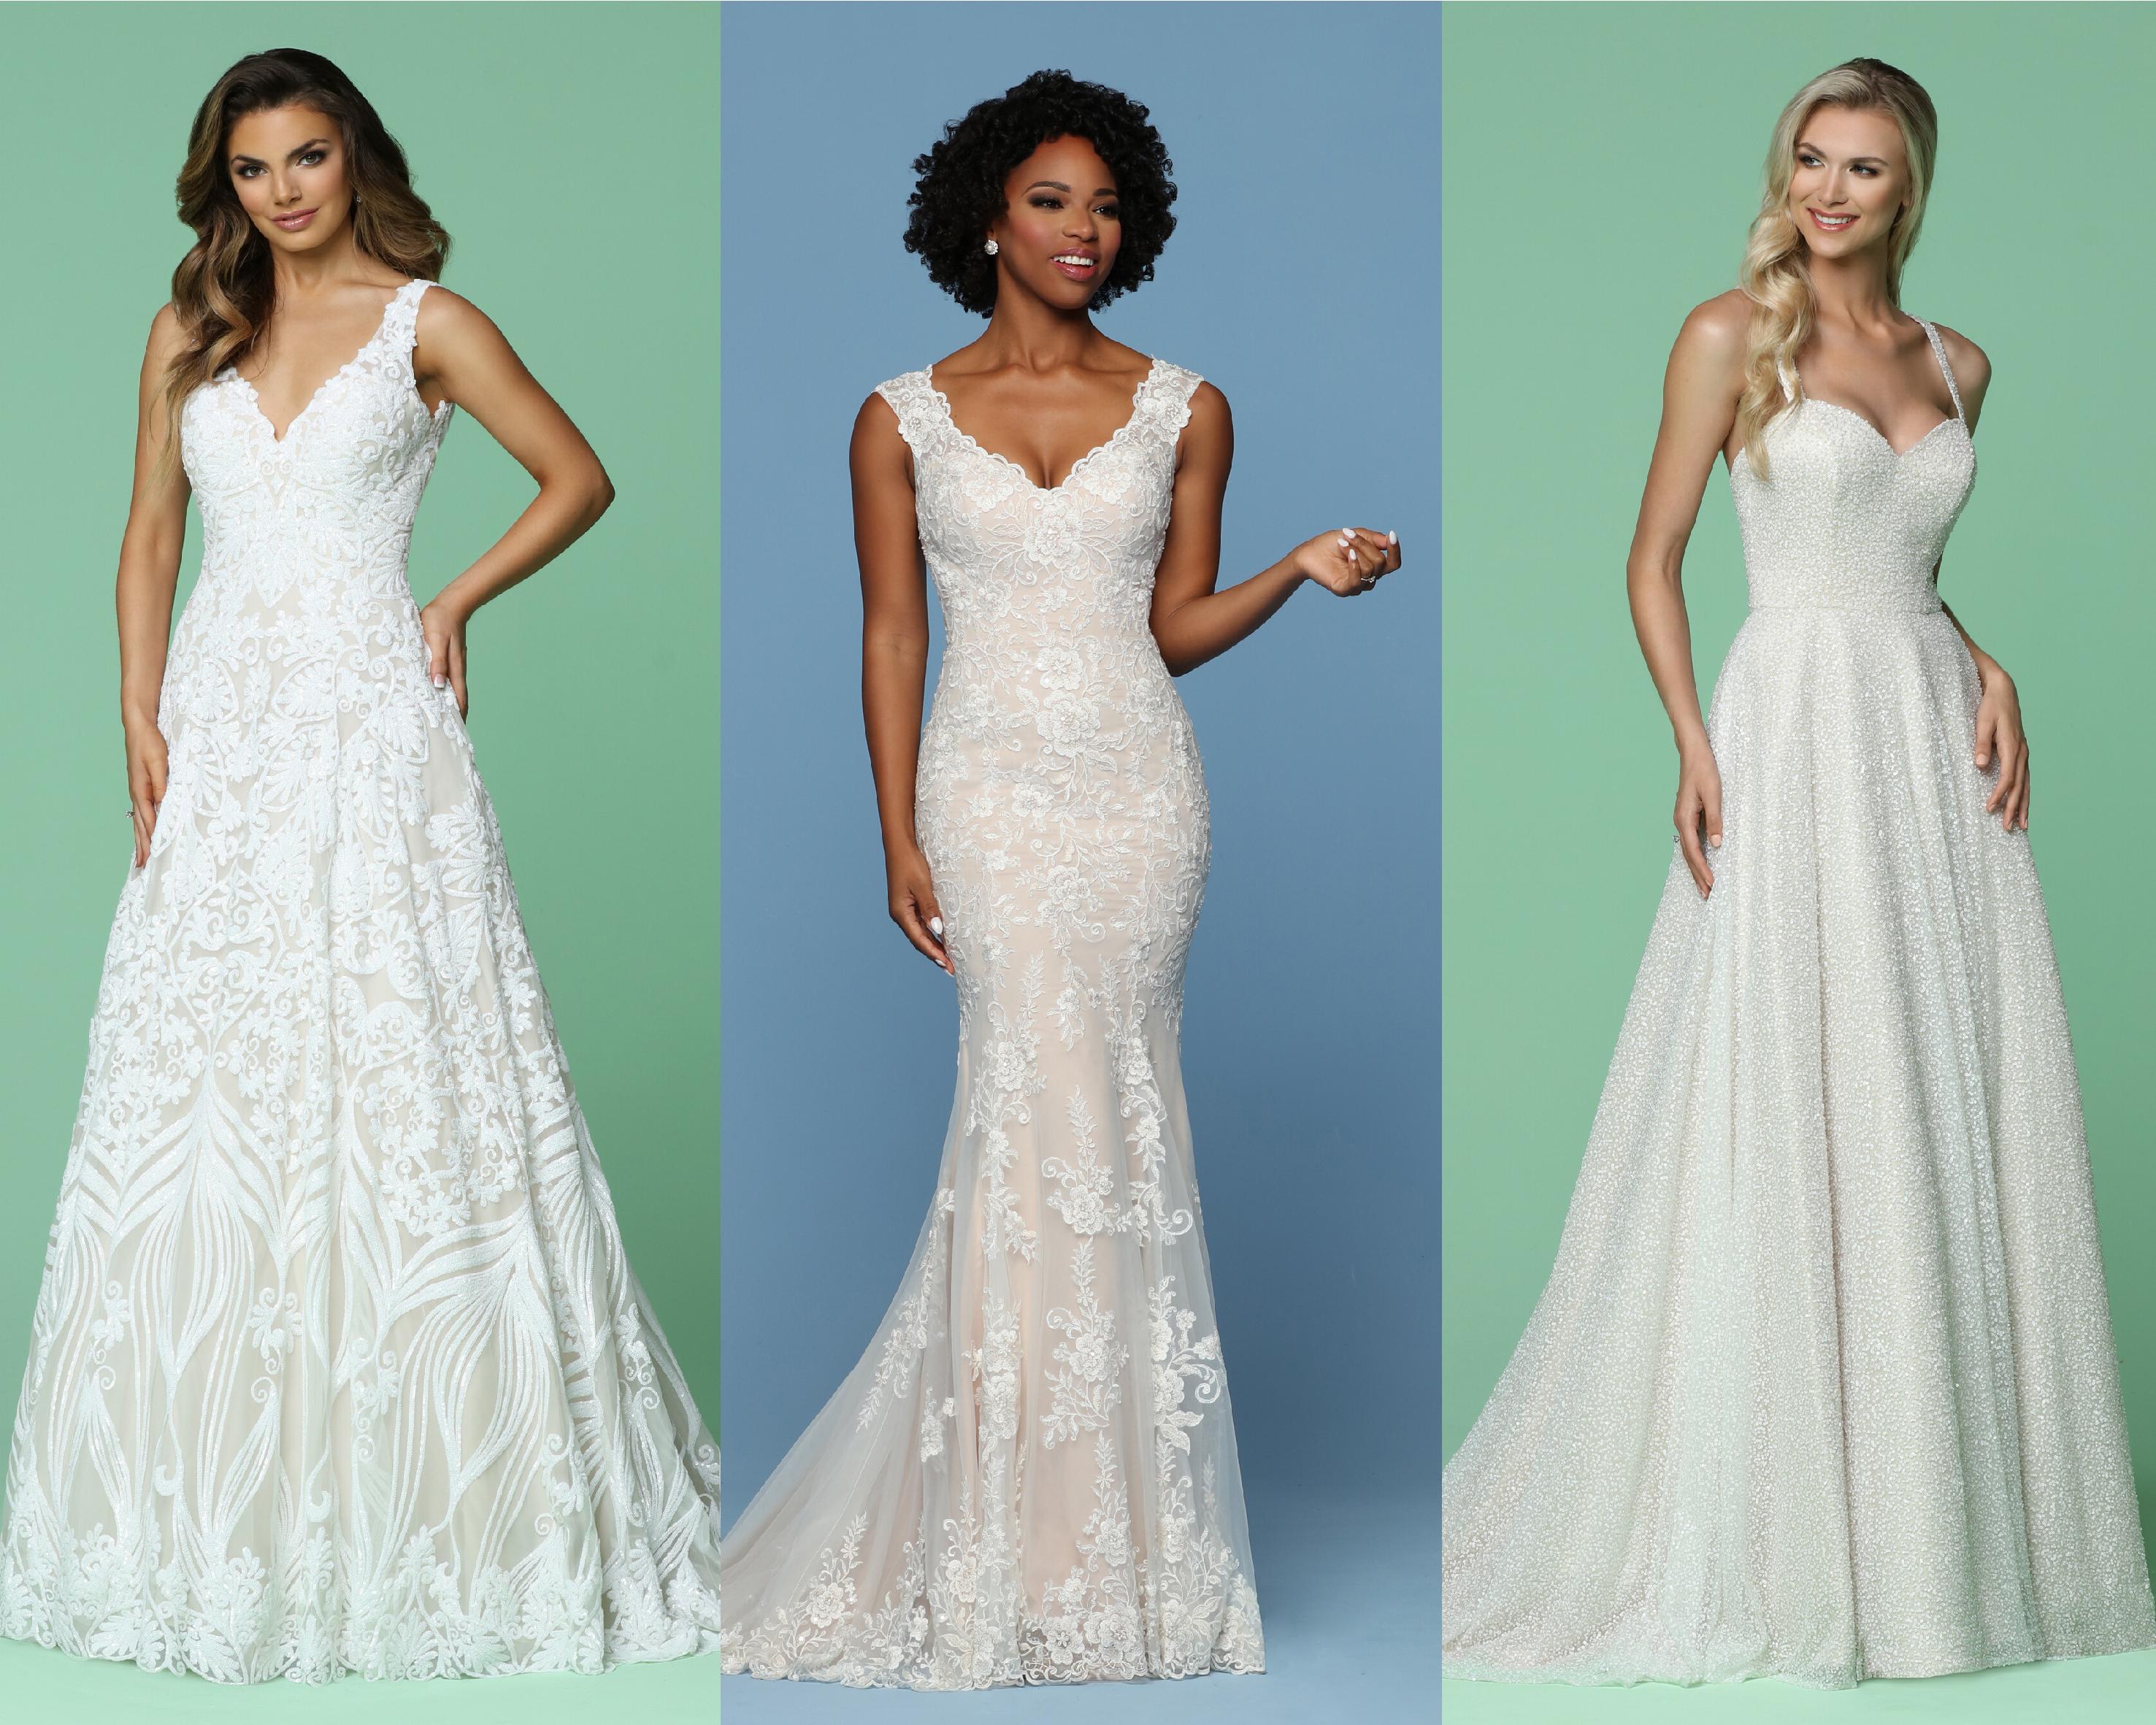 Top Classic Wedding Dress Trends: Allover Sparkle Wedding Dresses